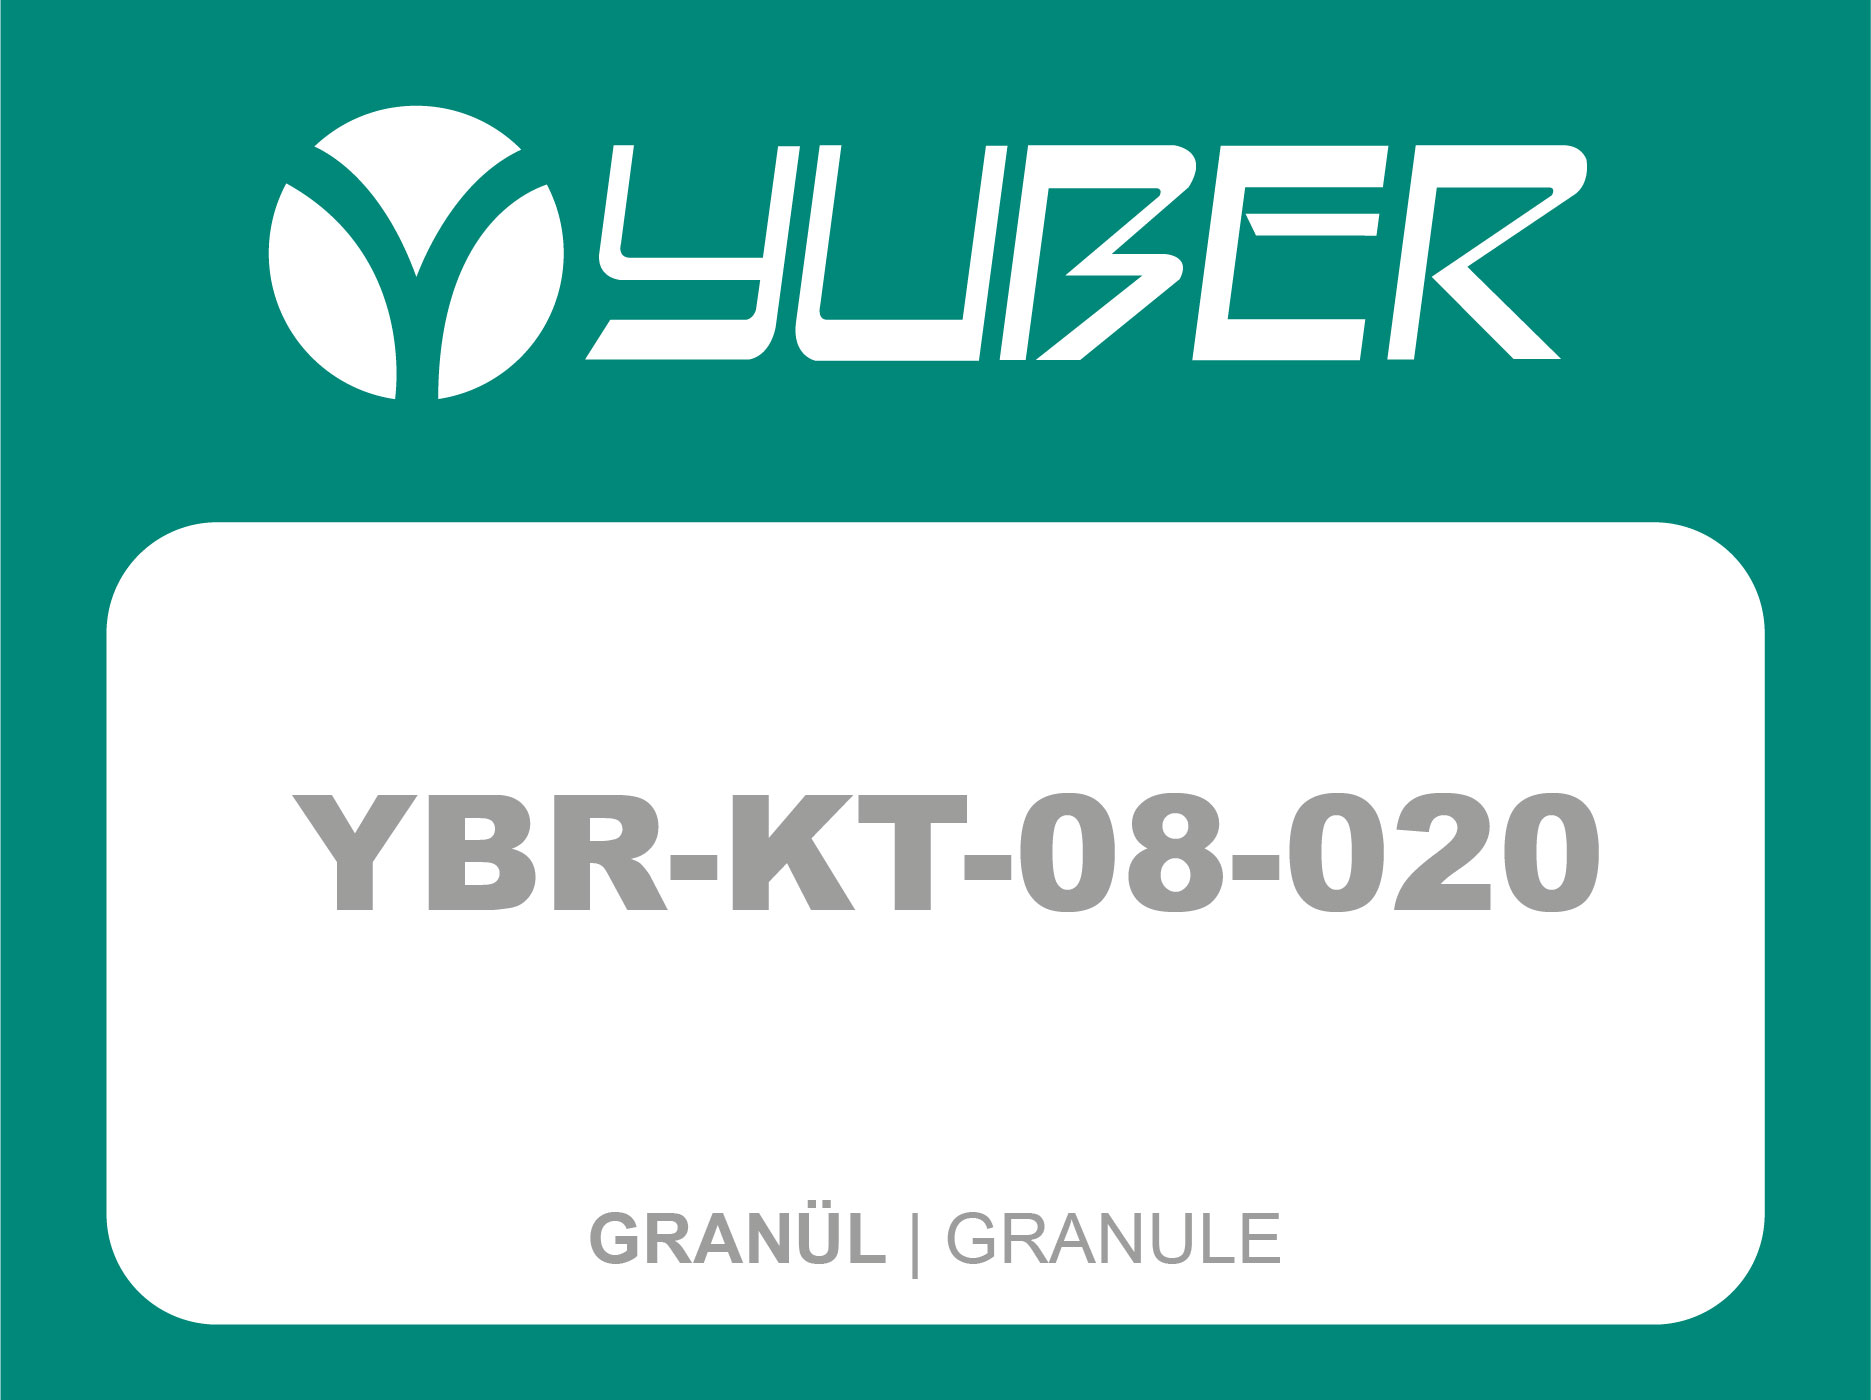 YBR KT 08 020 Granule Yuber Metallurgy